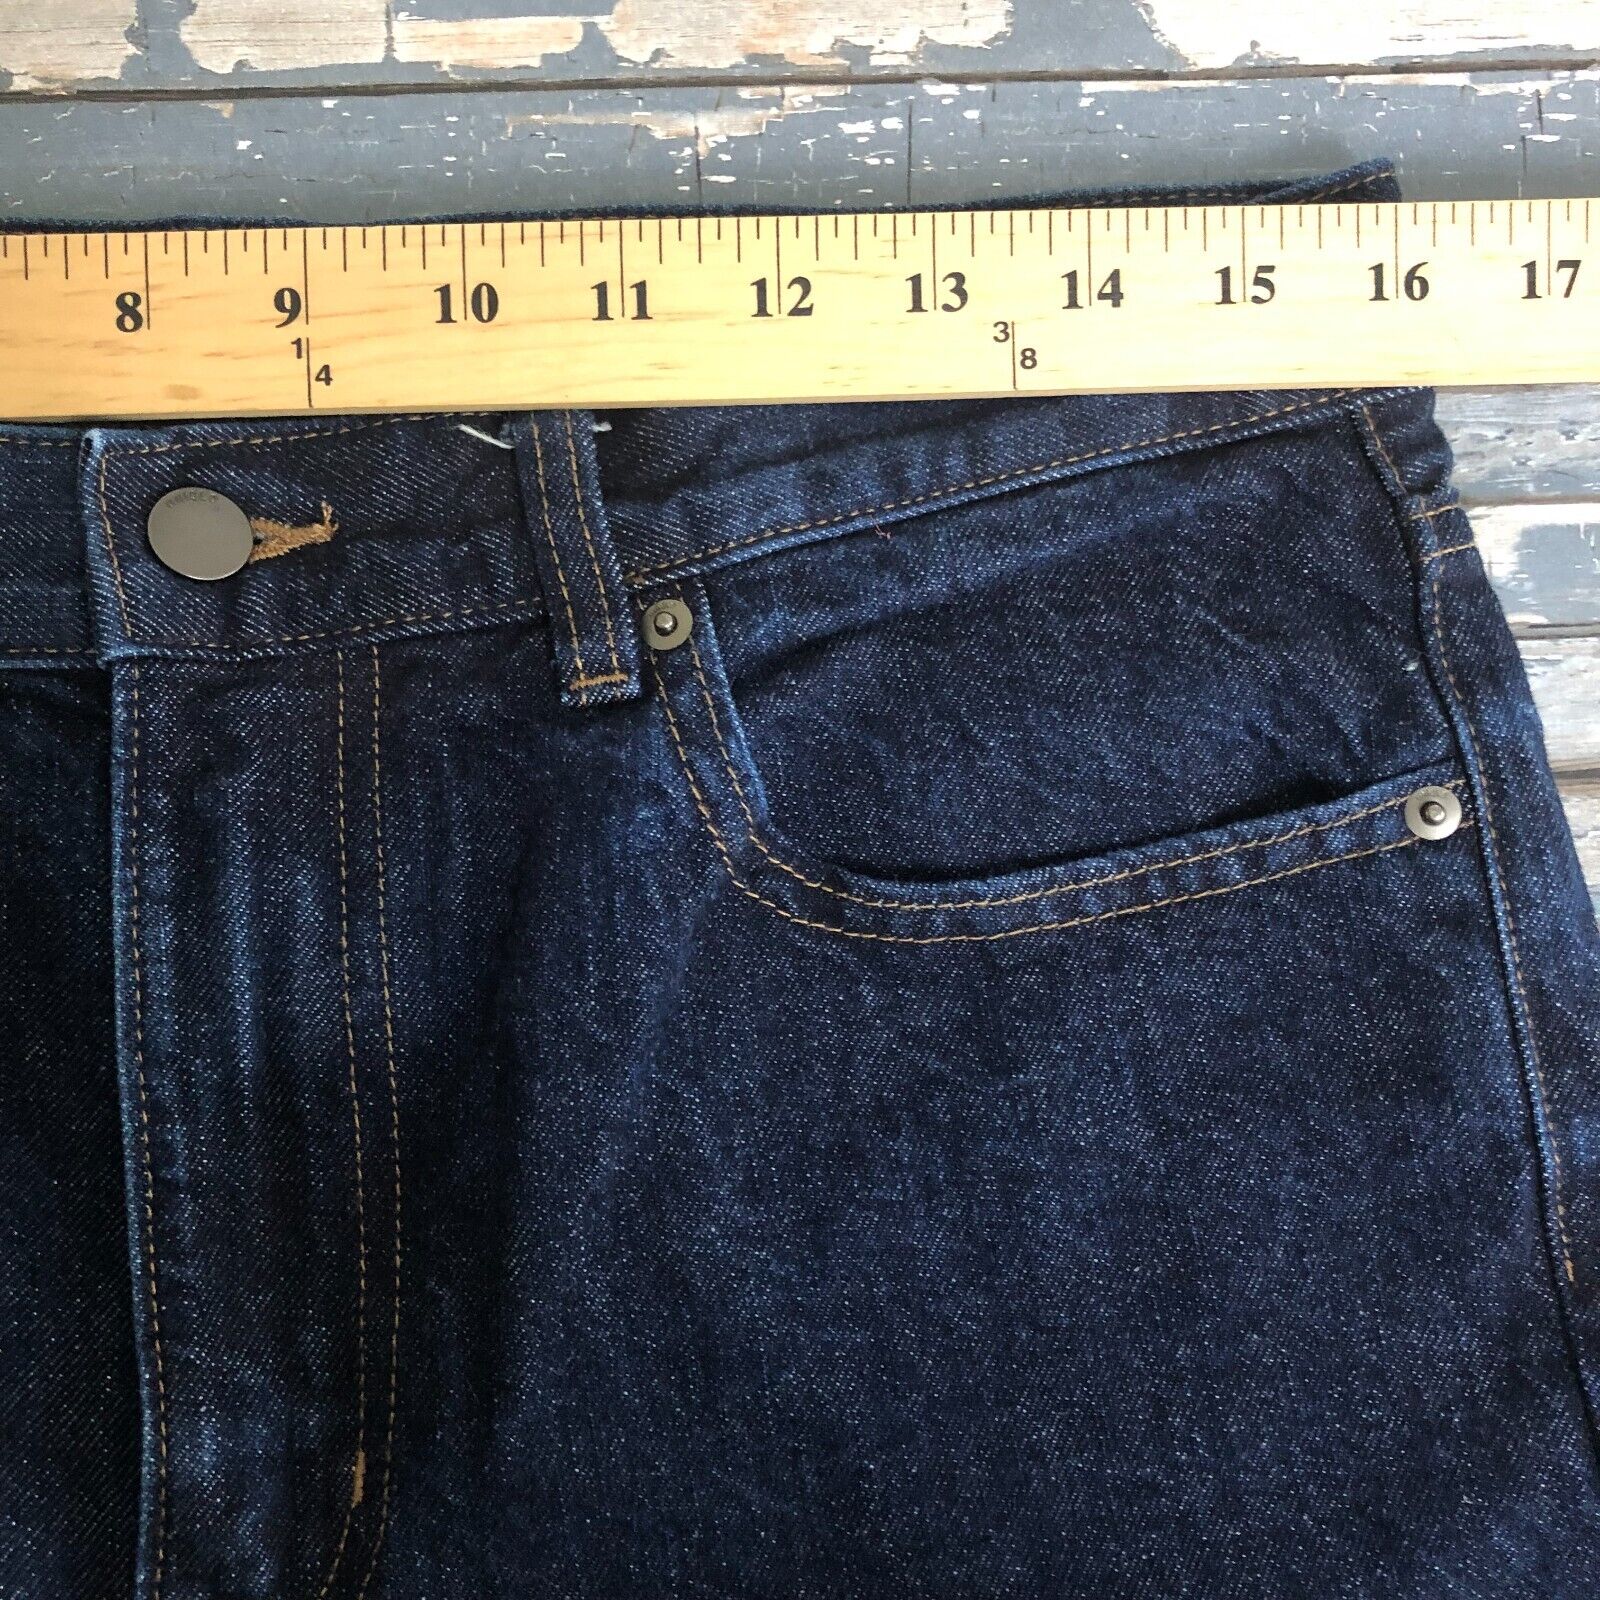 Uniqlo Jeans Tapered Cropped Size 28 Inch Waist Women's Dark Wash | eBay